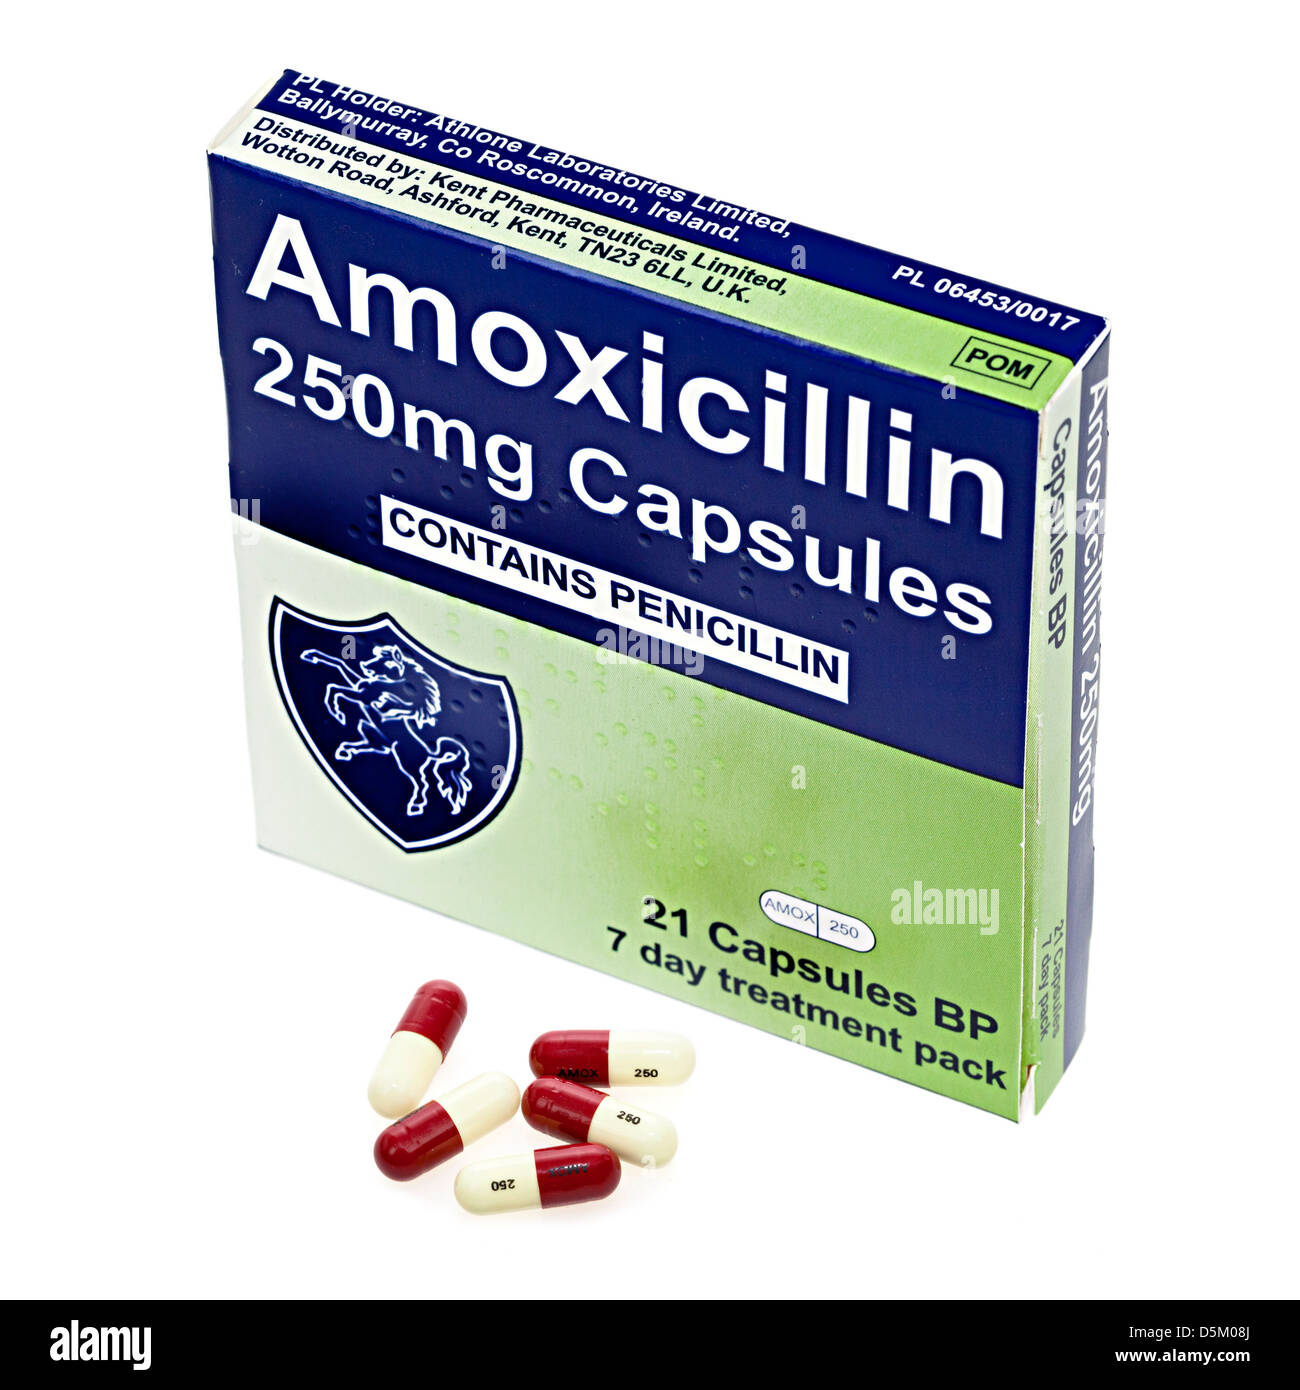 Amoxycillin 250mg Kapseln für Penicillin-Behandlung Stockfoto